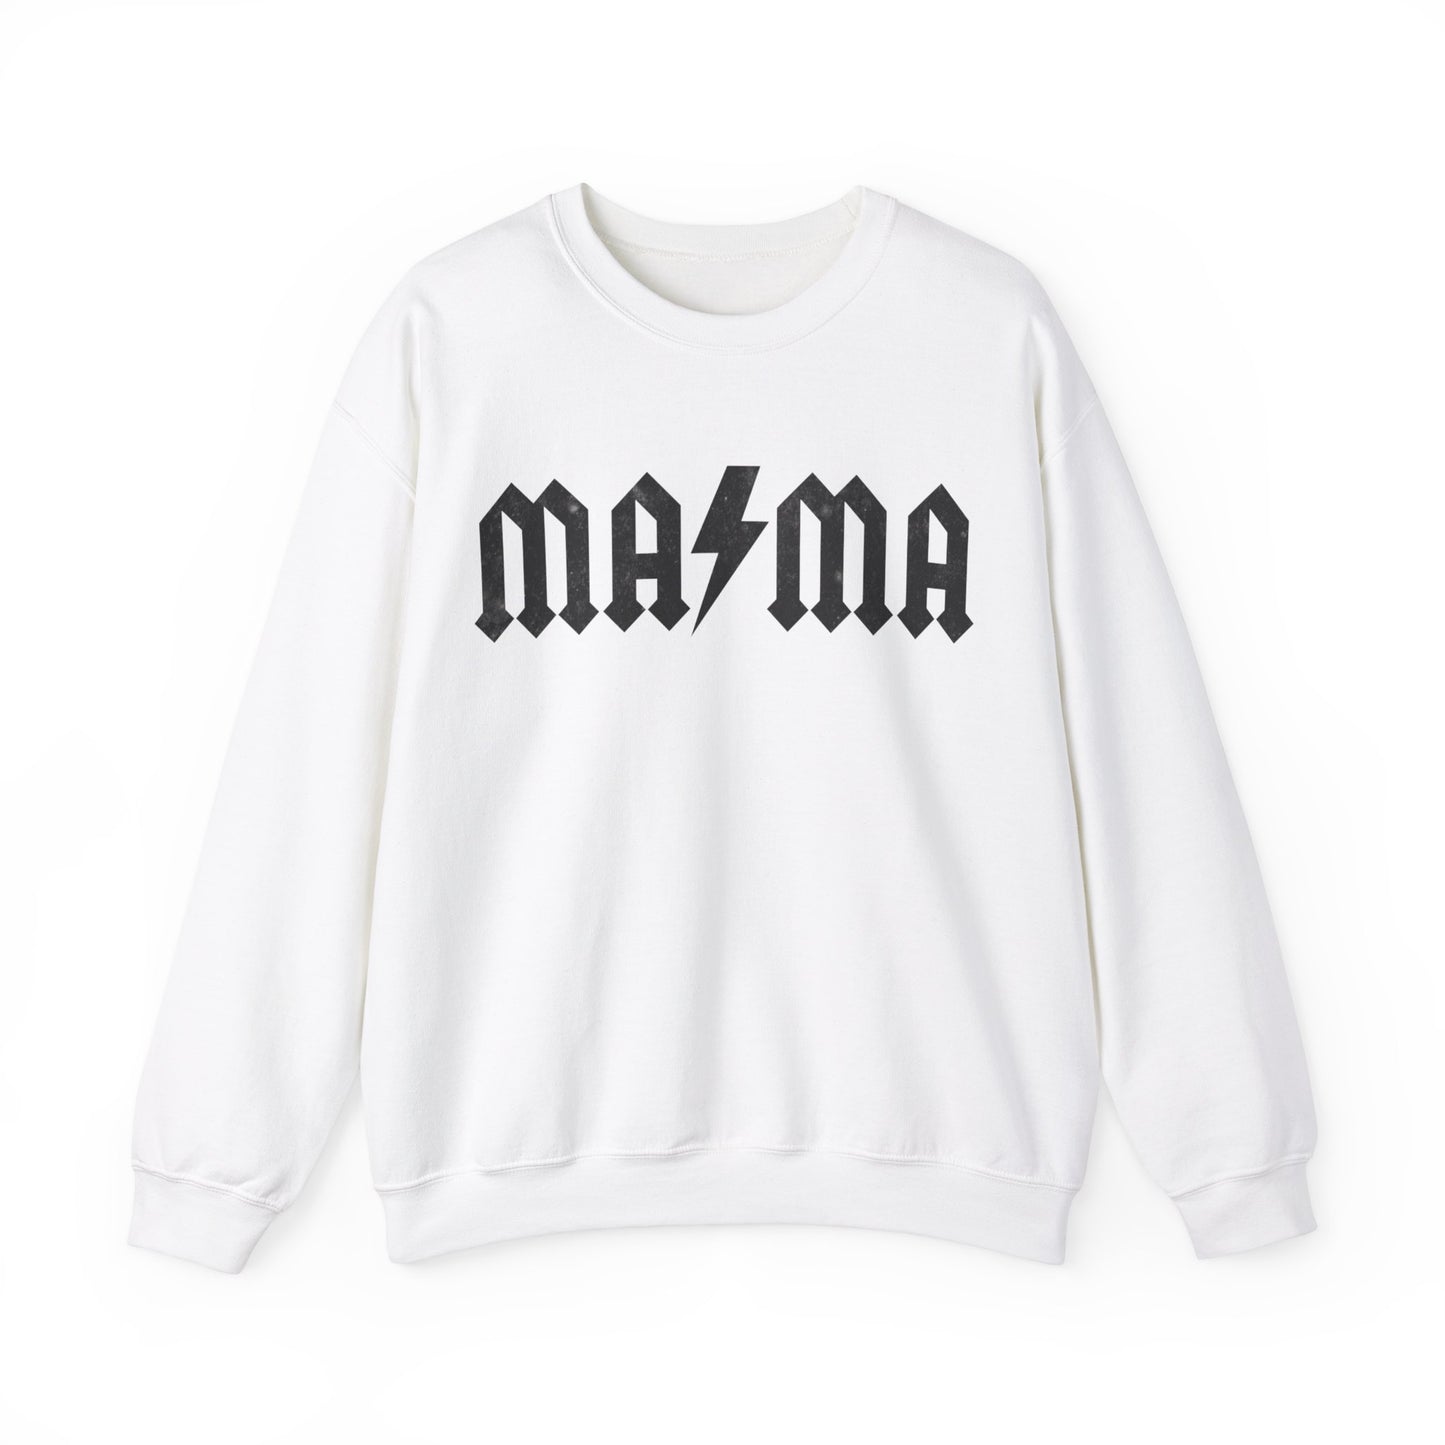 Retro Mama Sweatshirt, Mom Sweatshirt, Mothers Day Gift, Retro Mama Sweatshirt, Best Mama Sweatshirt from Daughter, Gift for Best Mom, S1156